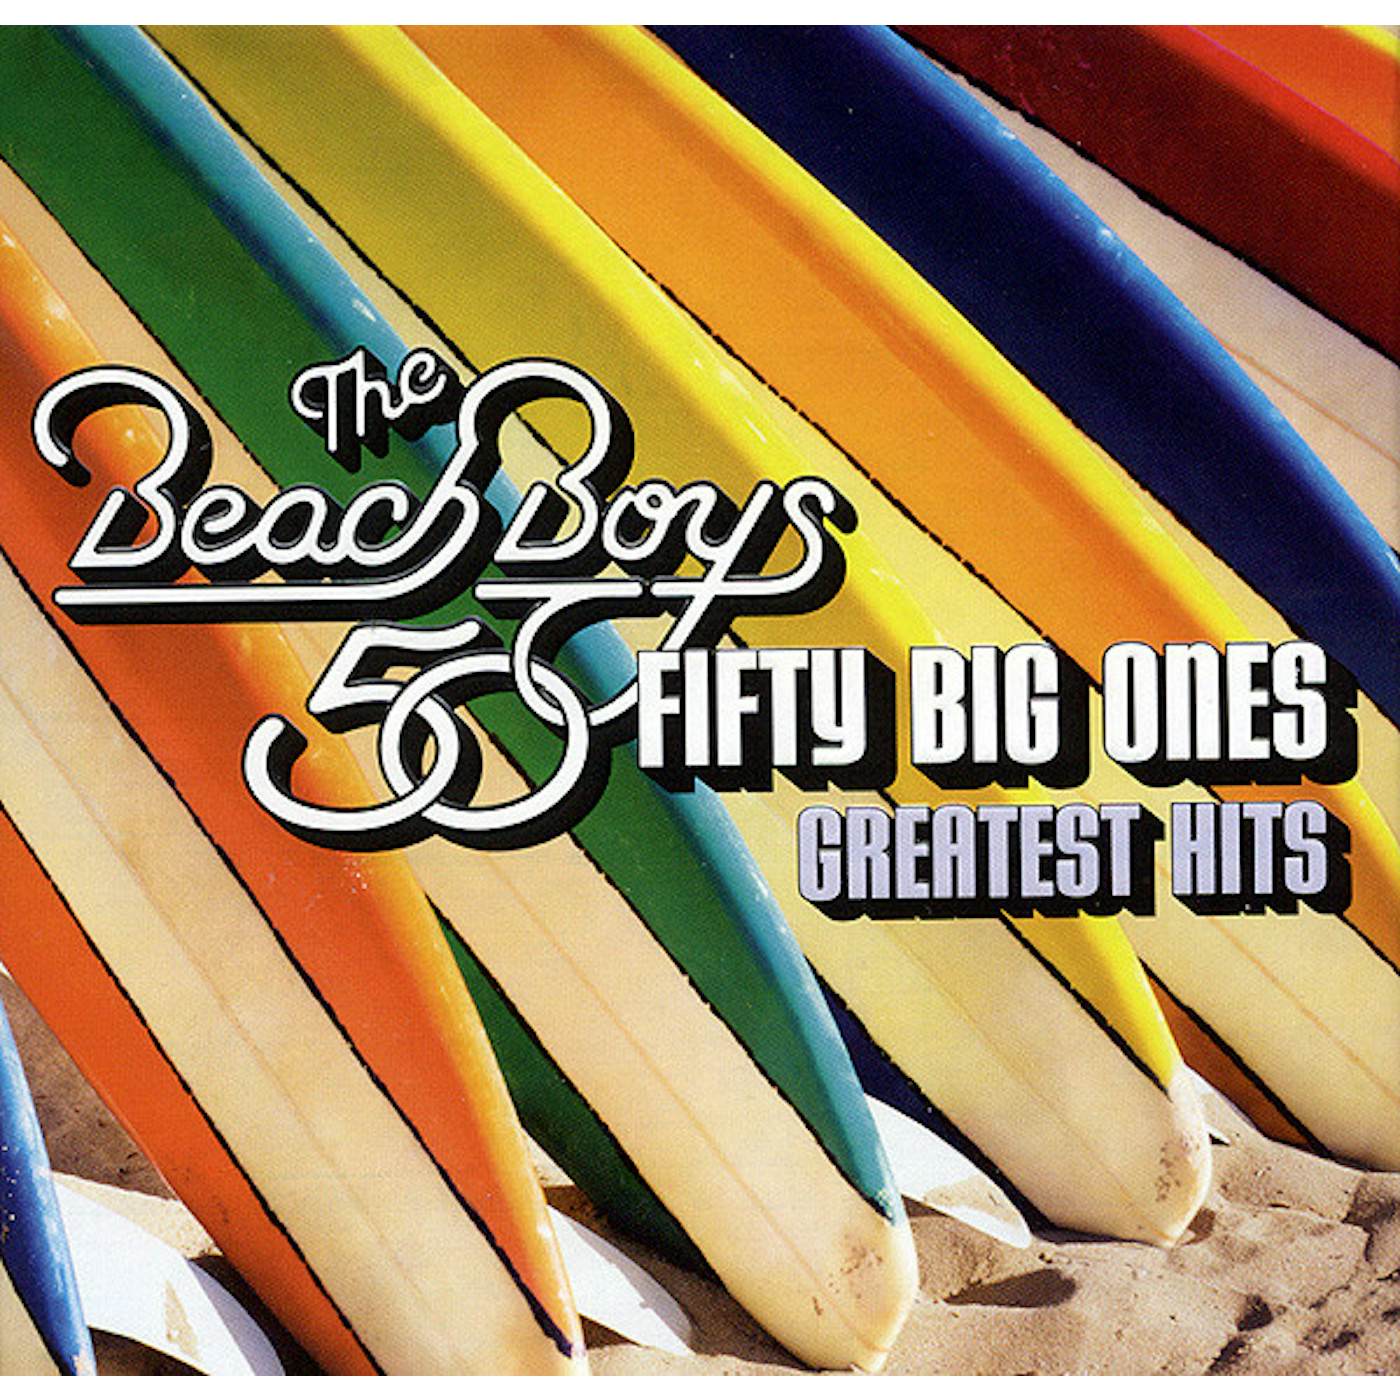 The Beach Boys GREATEST HITS: 50 BIG ONES CD